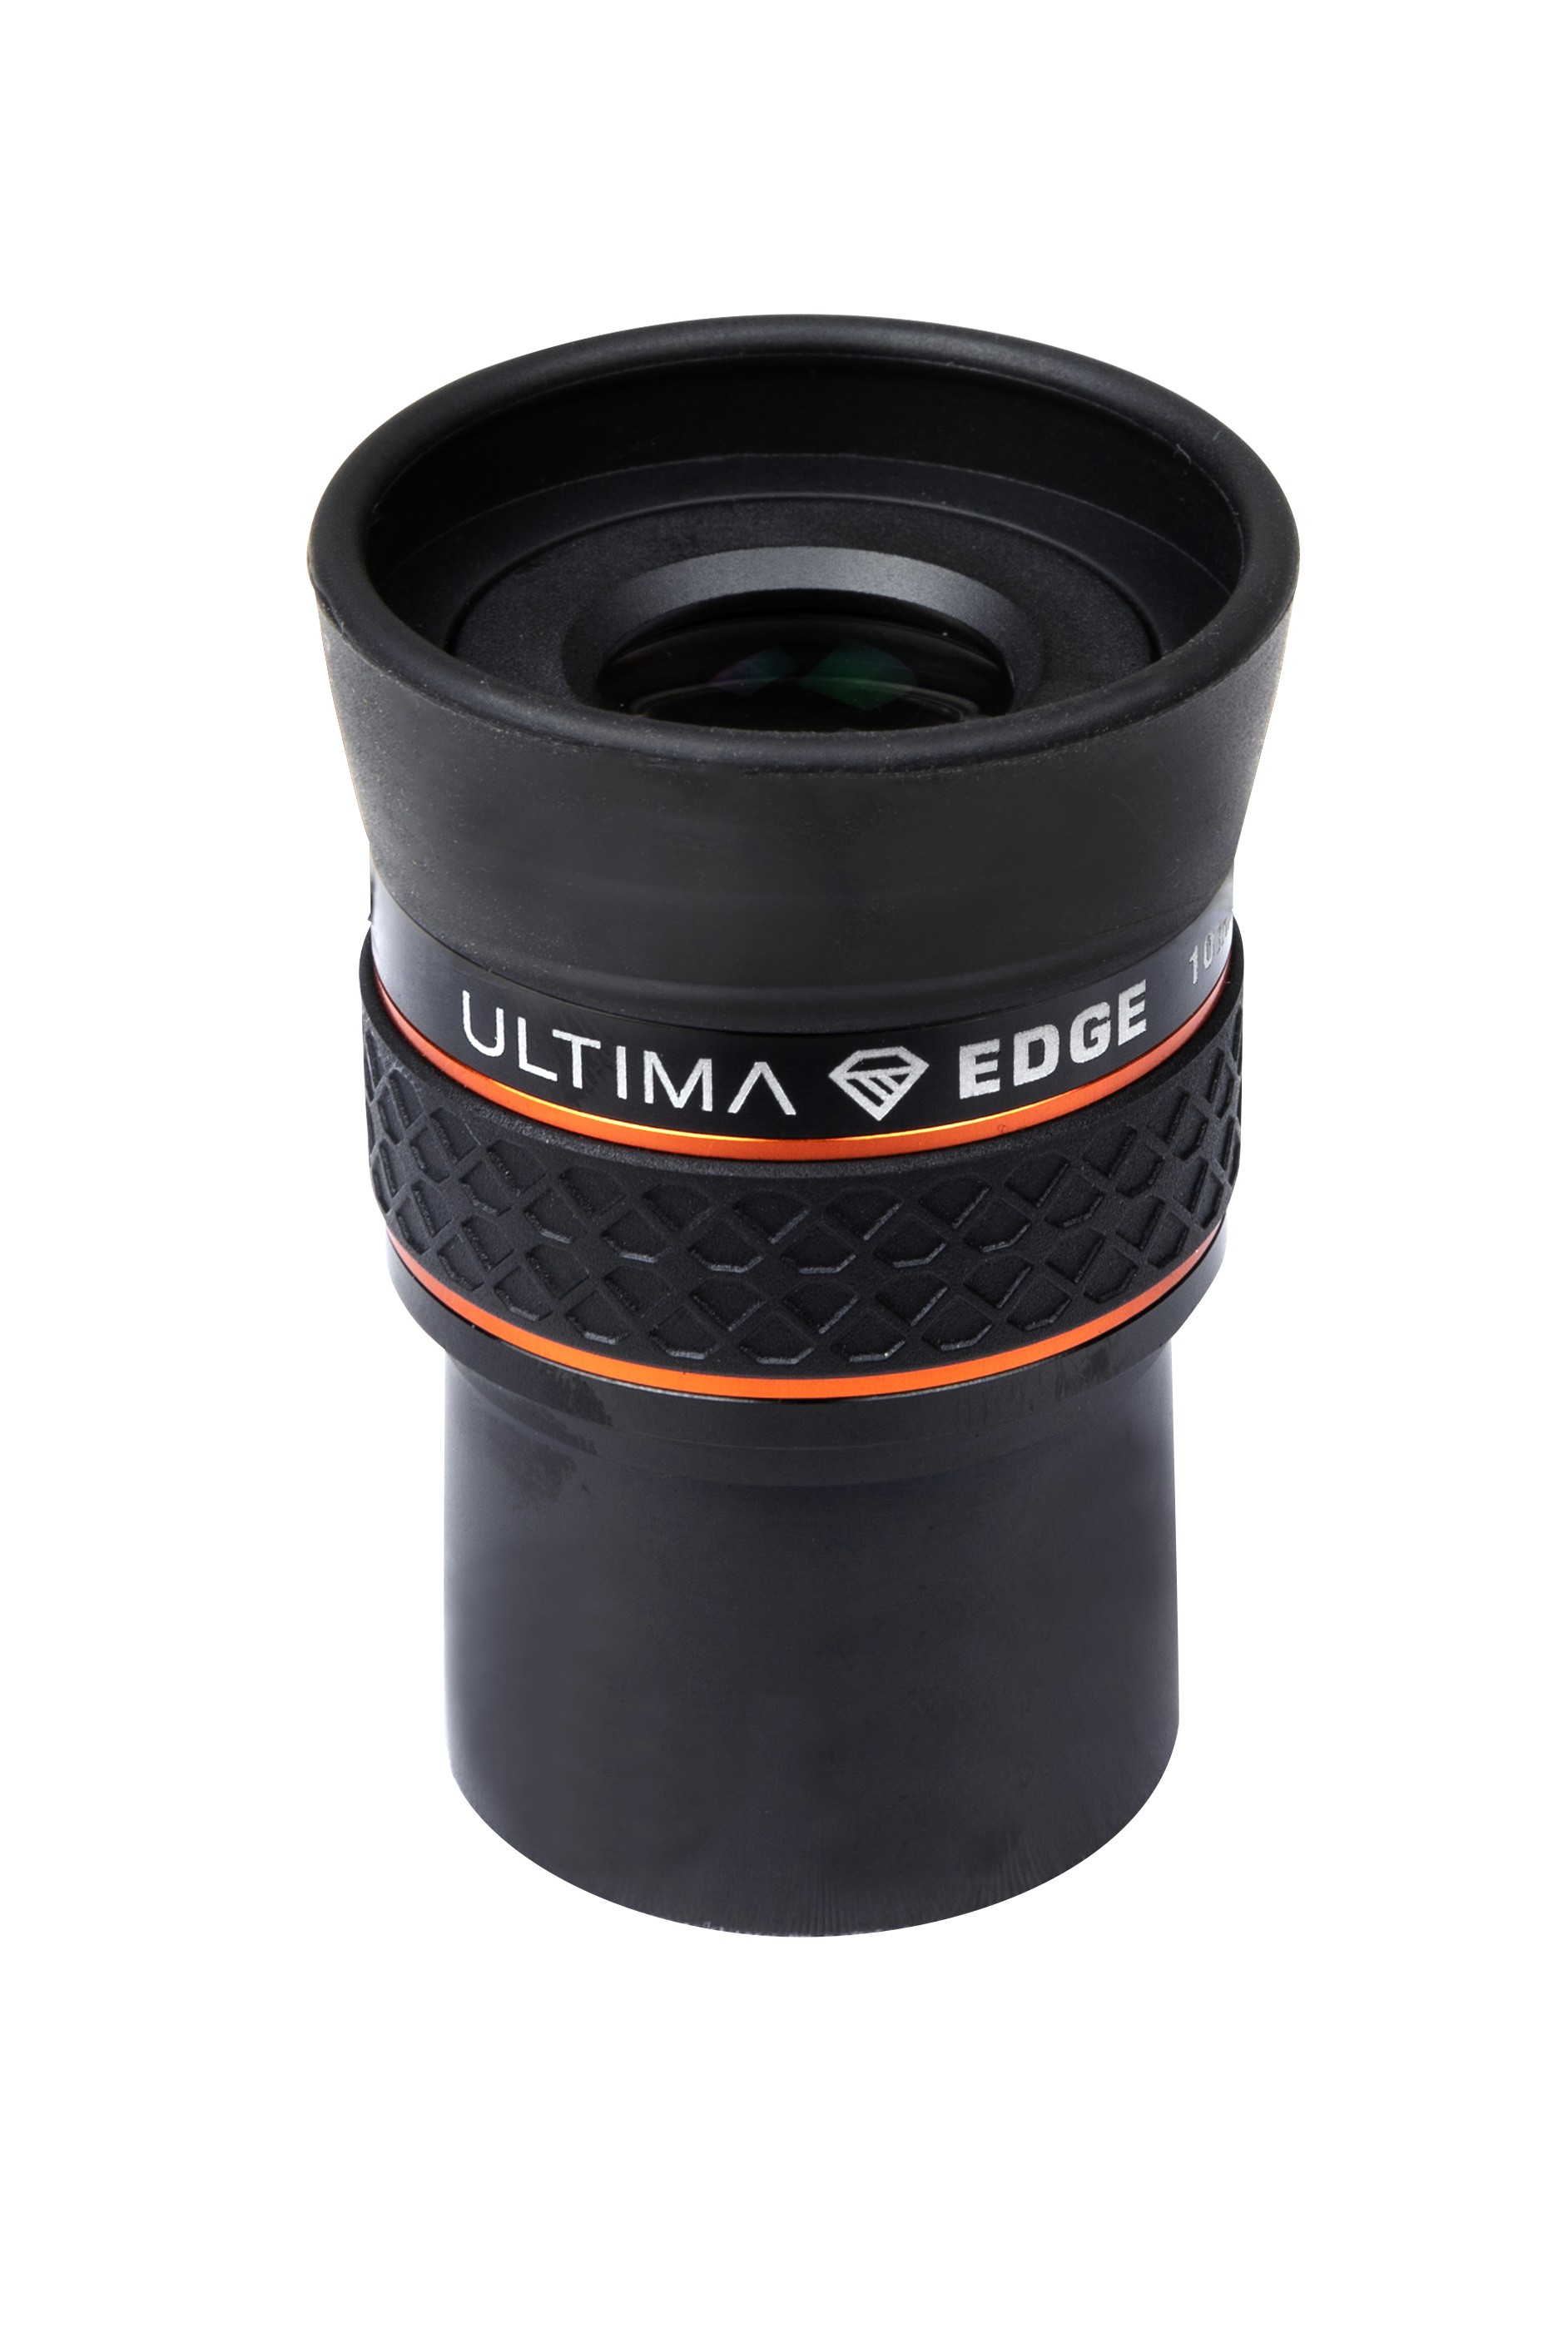 Celestron Ultima Edge Eyepiece - 1.25 Inch 10mm